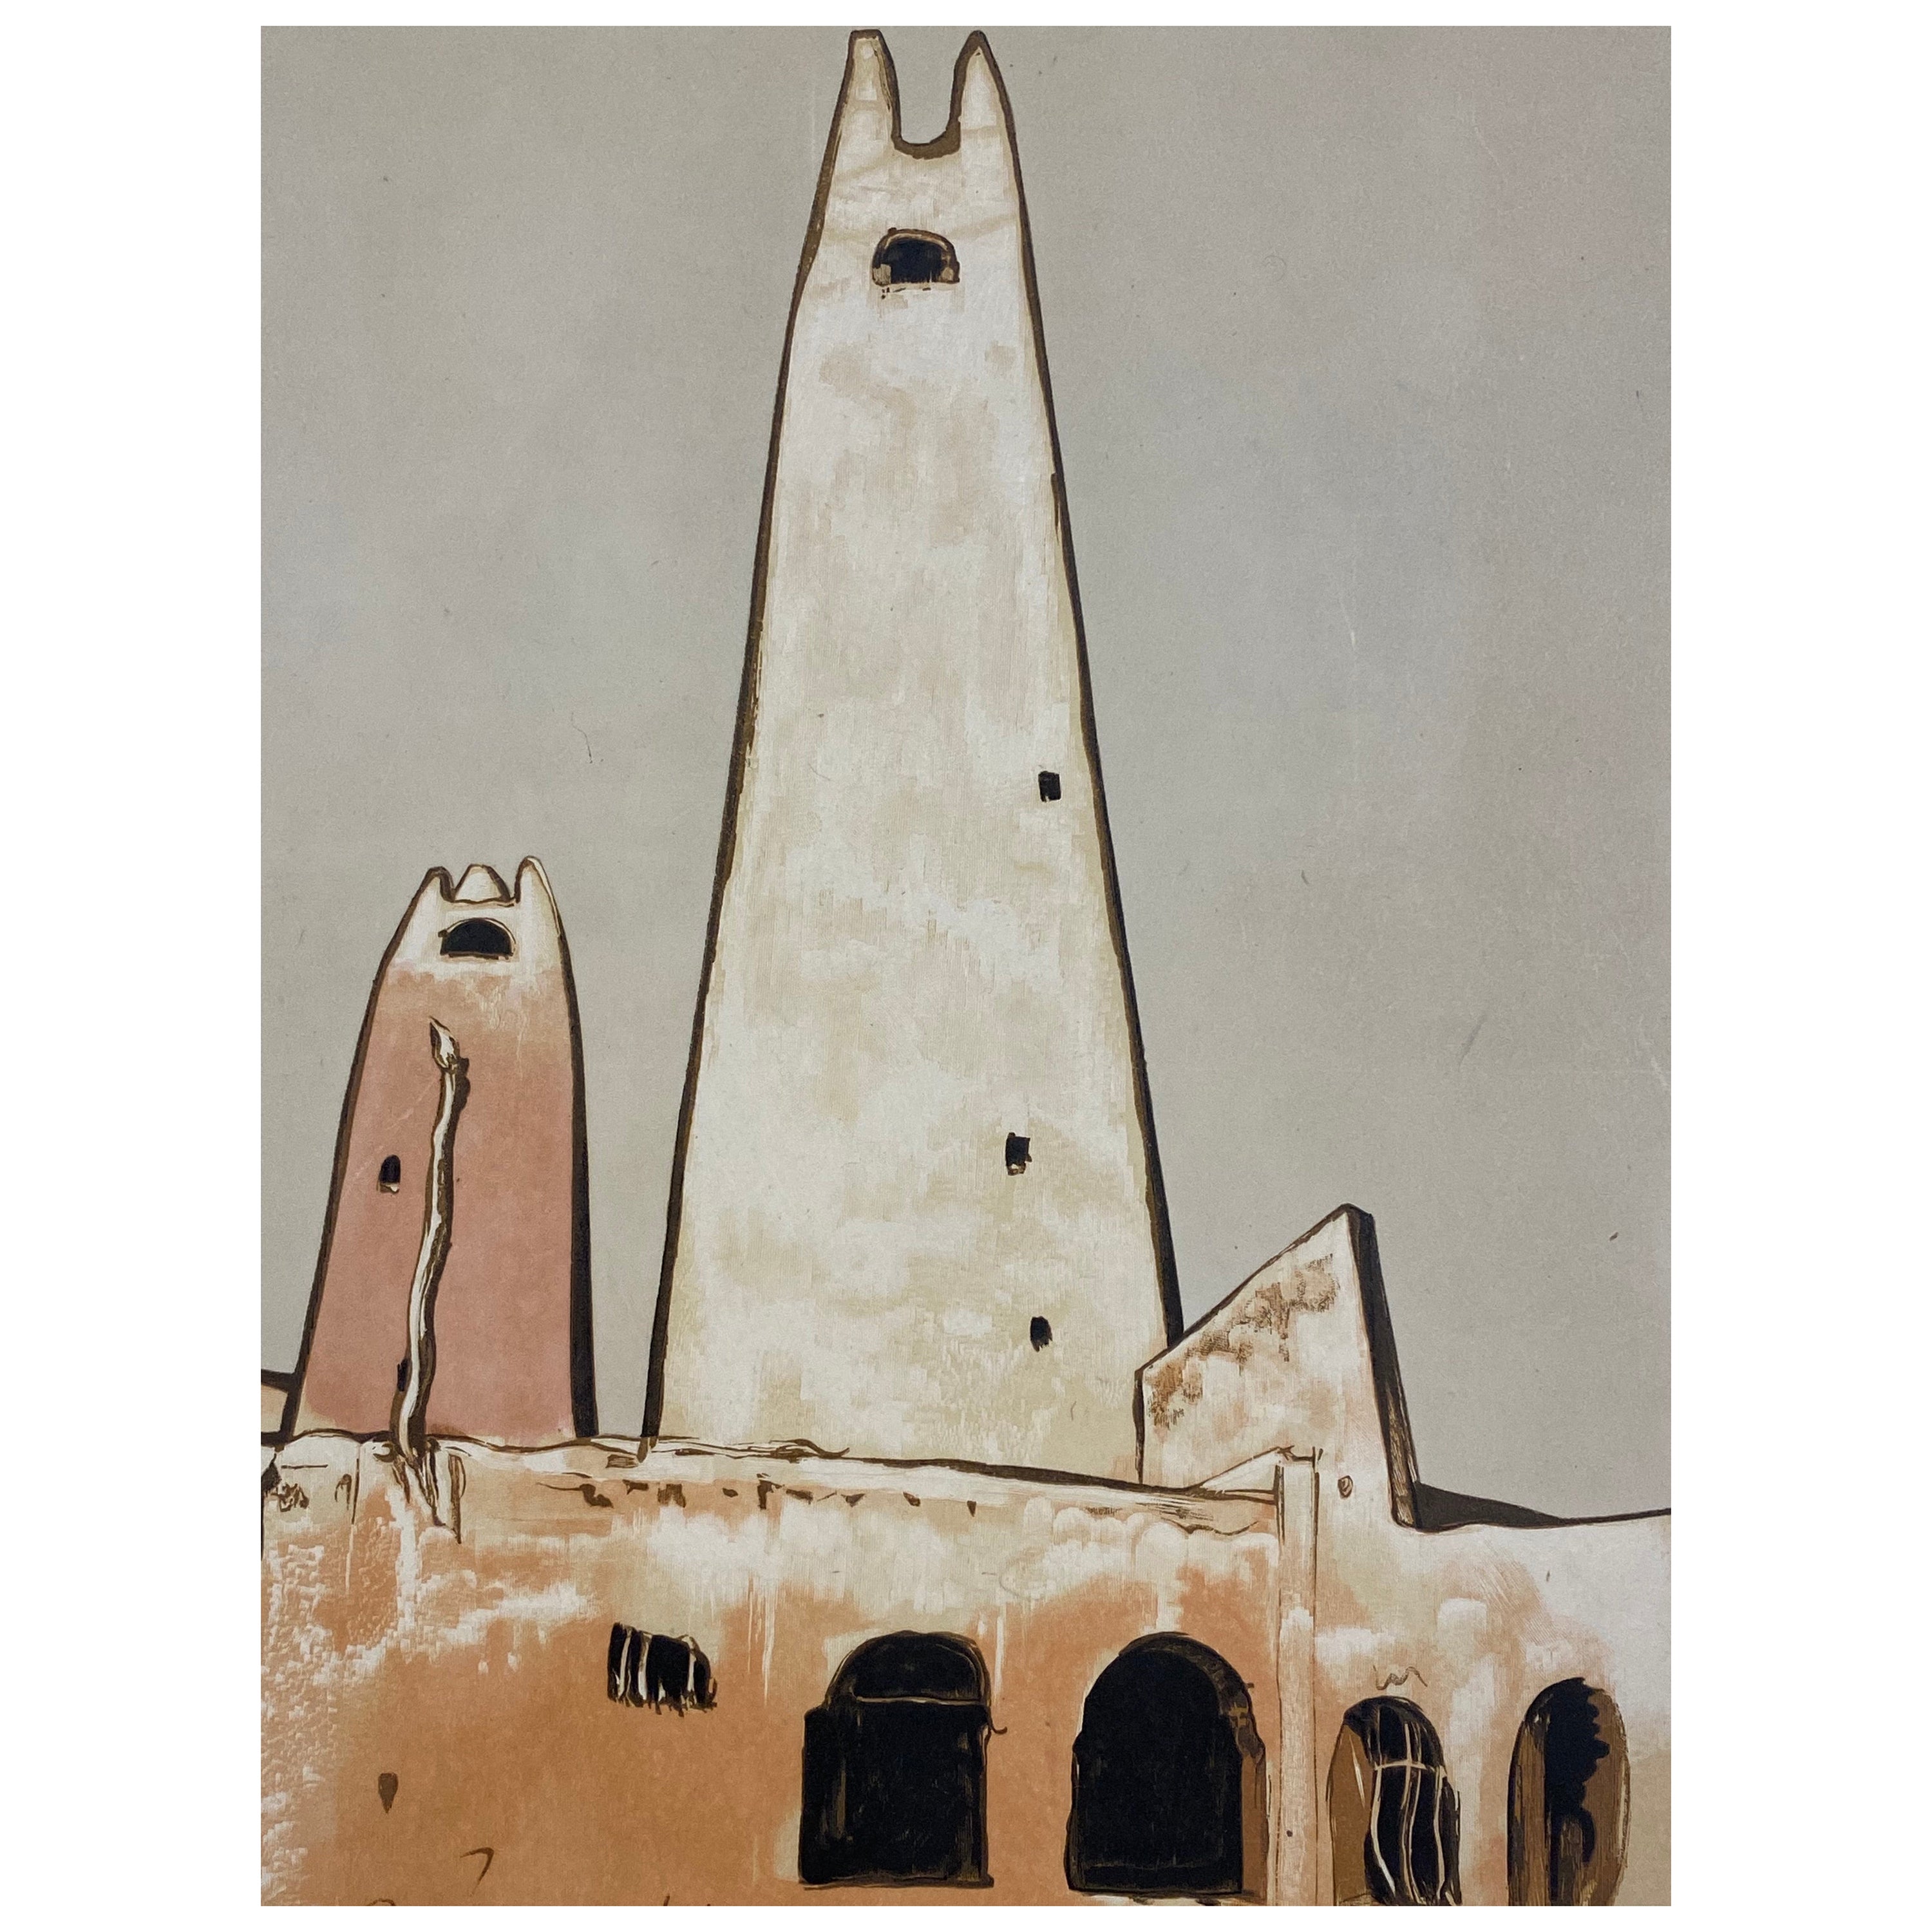 "Museum of Ghardaïa" the Old Minaret Paul Elie Dubois For Sale